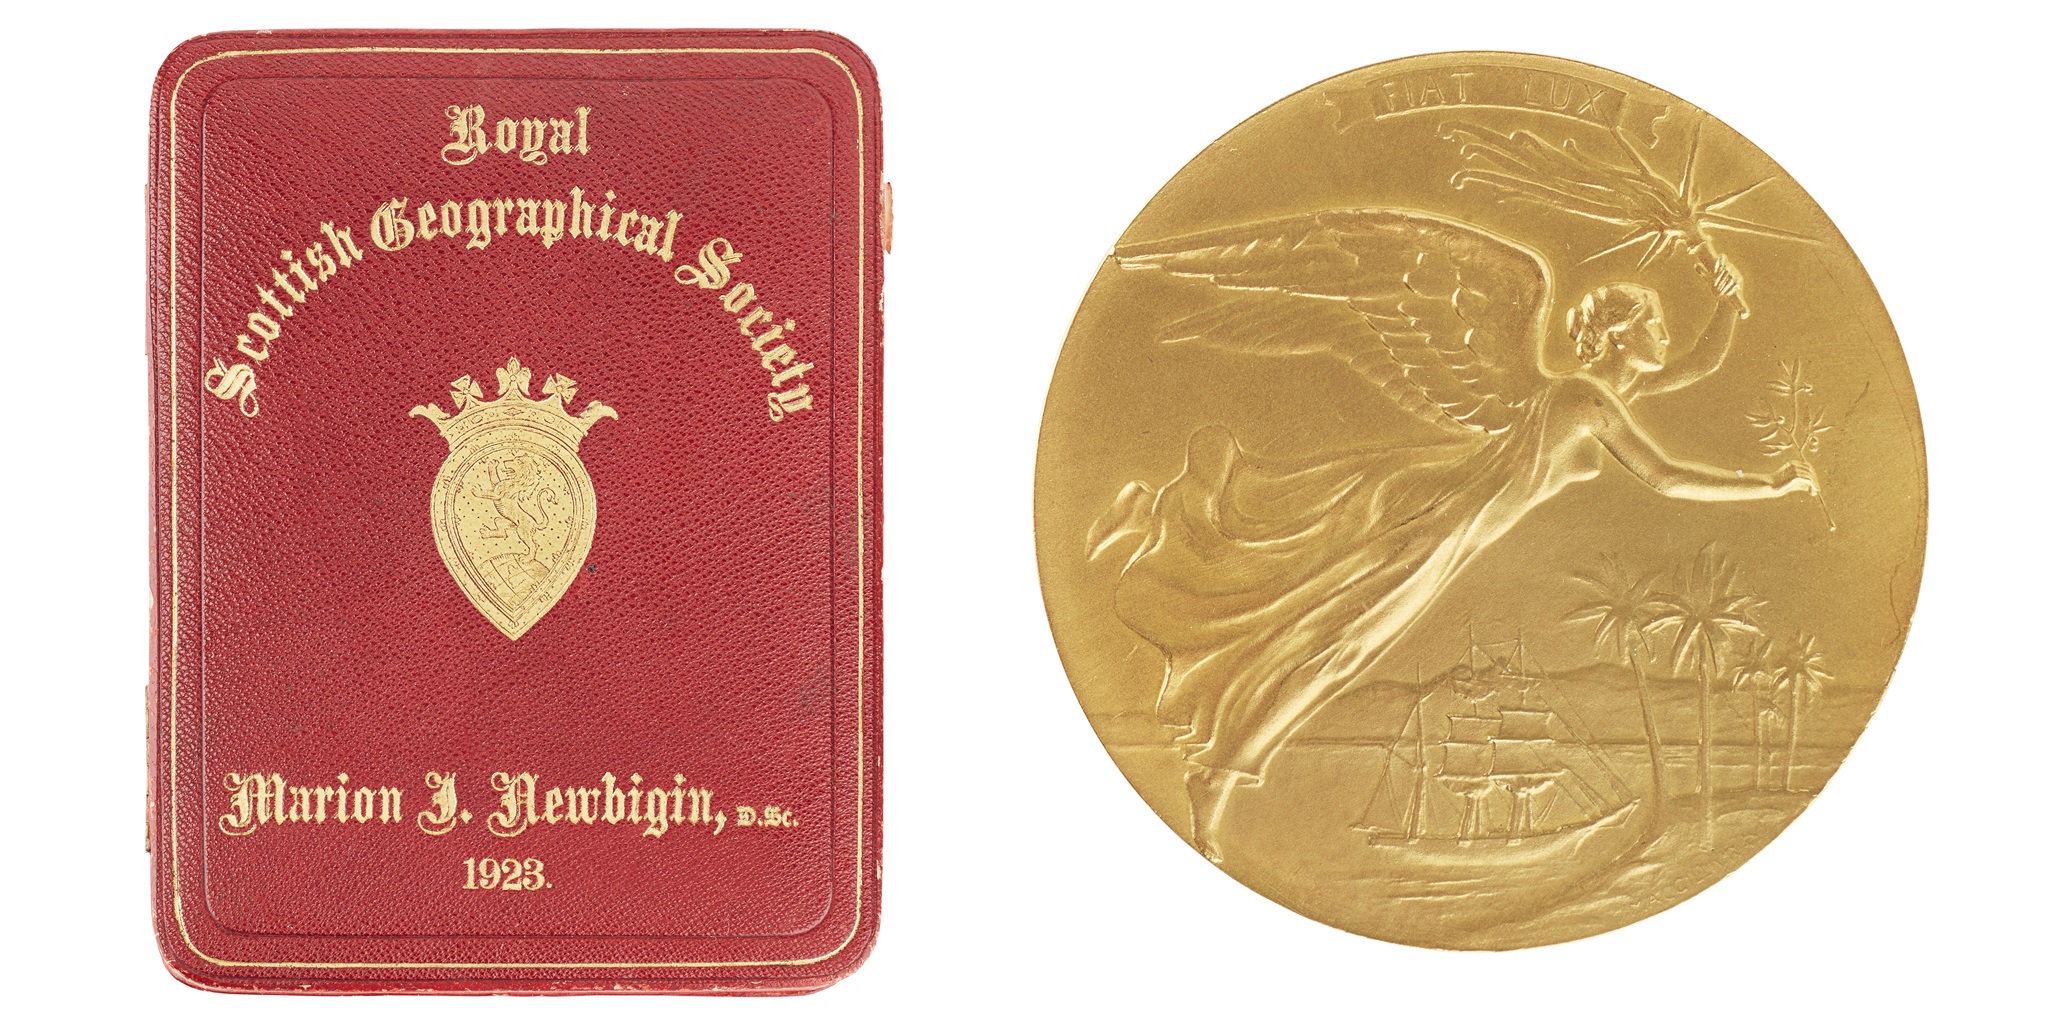 The David Livingstone Medal